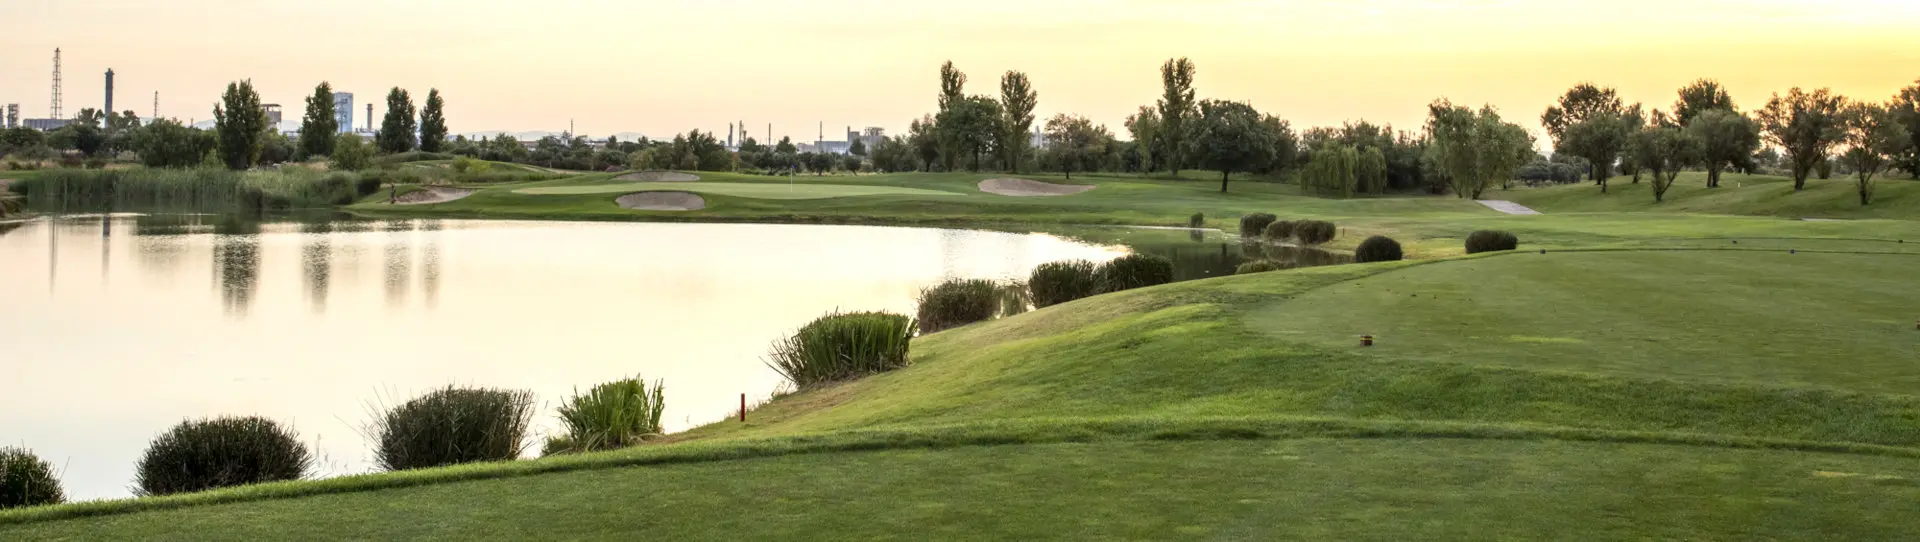 Spain golf courses - Infinitum Lakes (Ex Lumine) - Photo 3